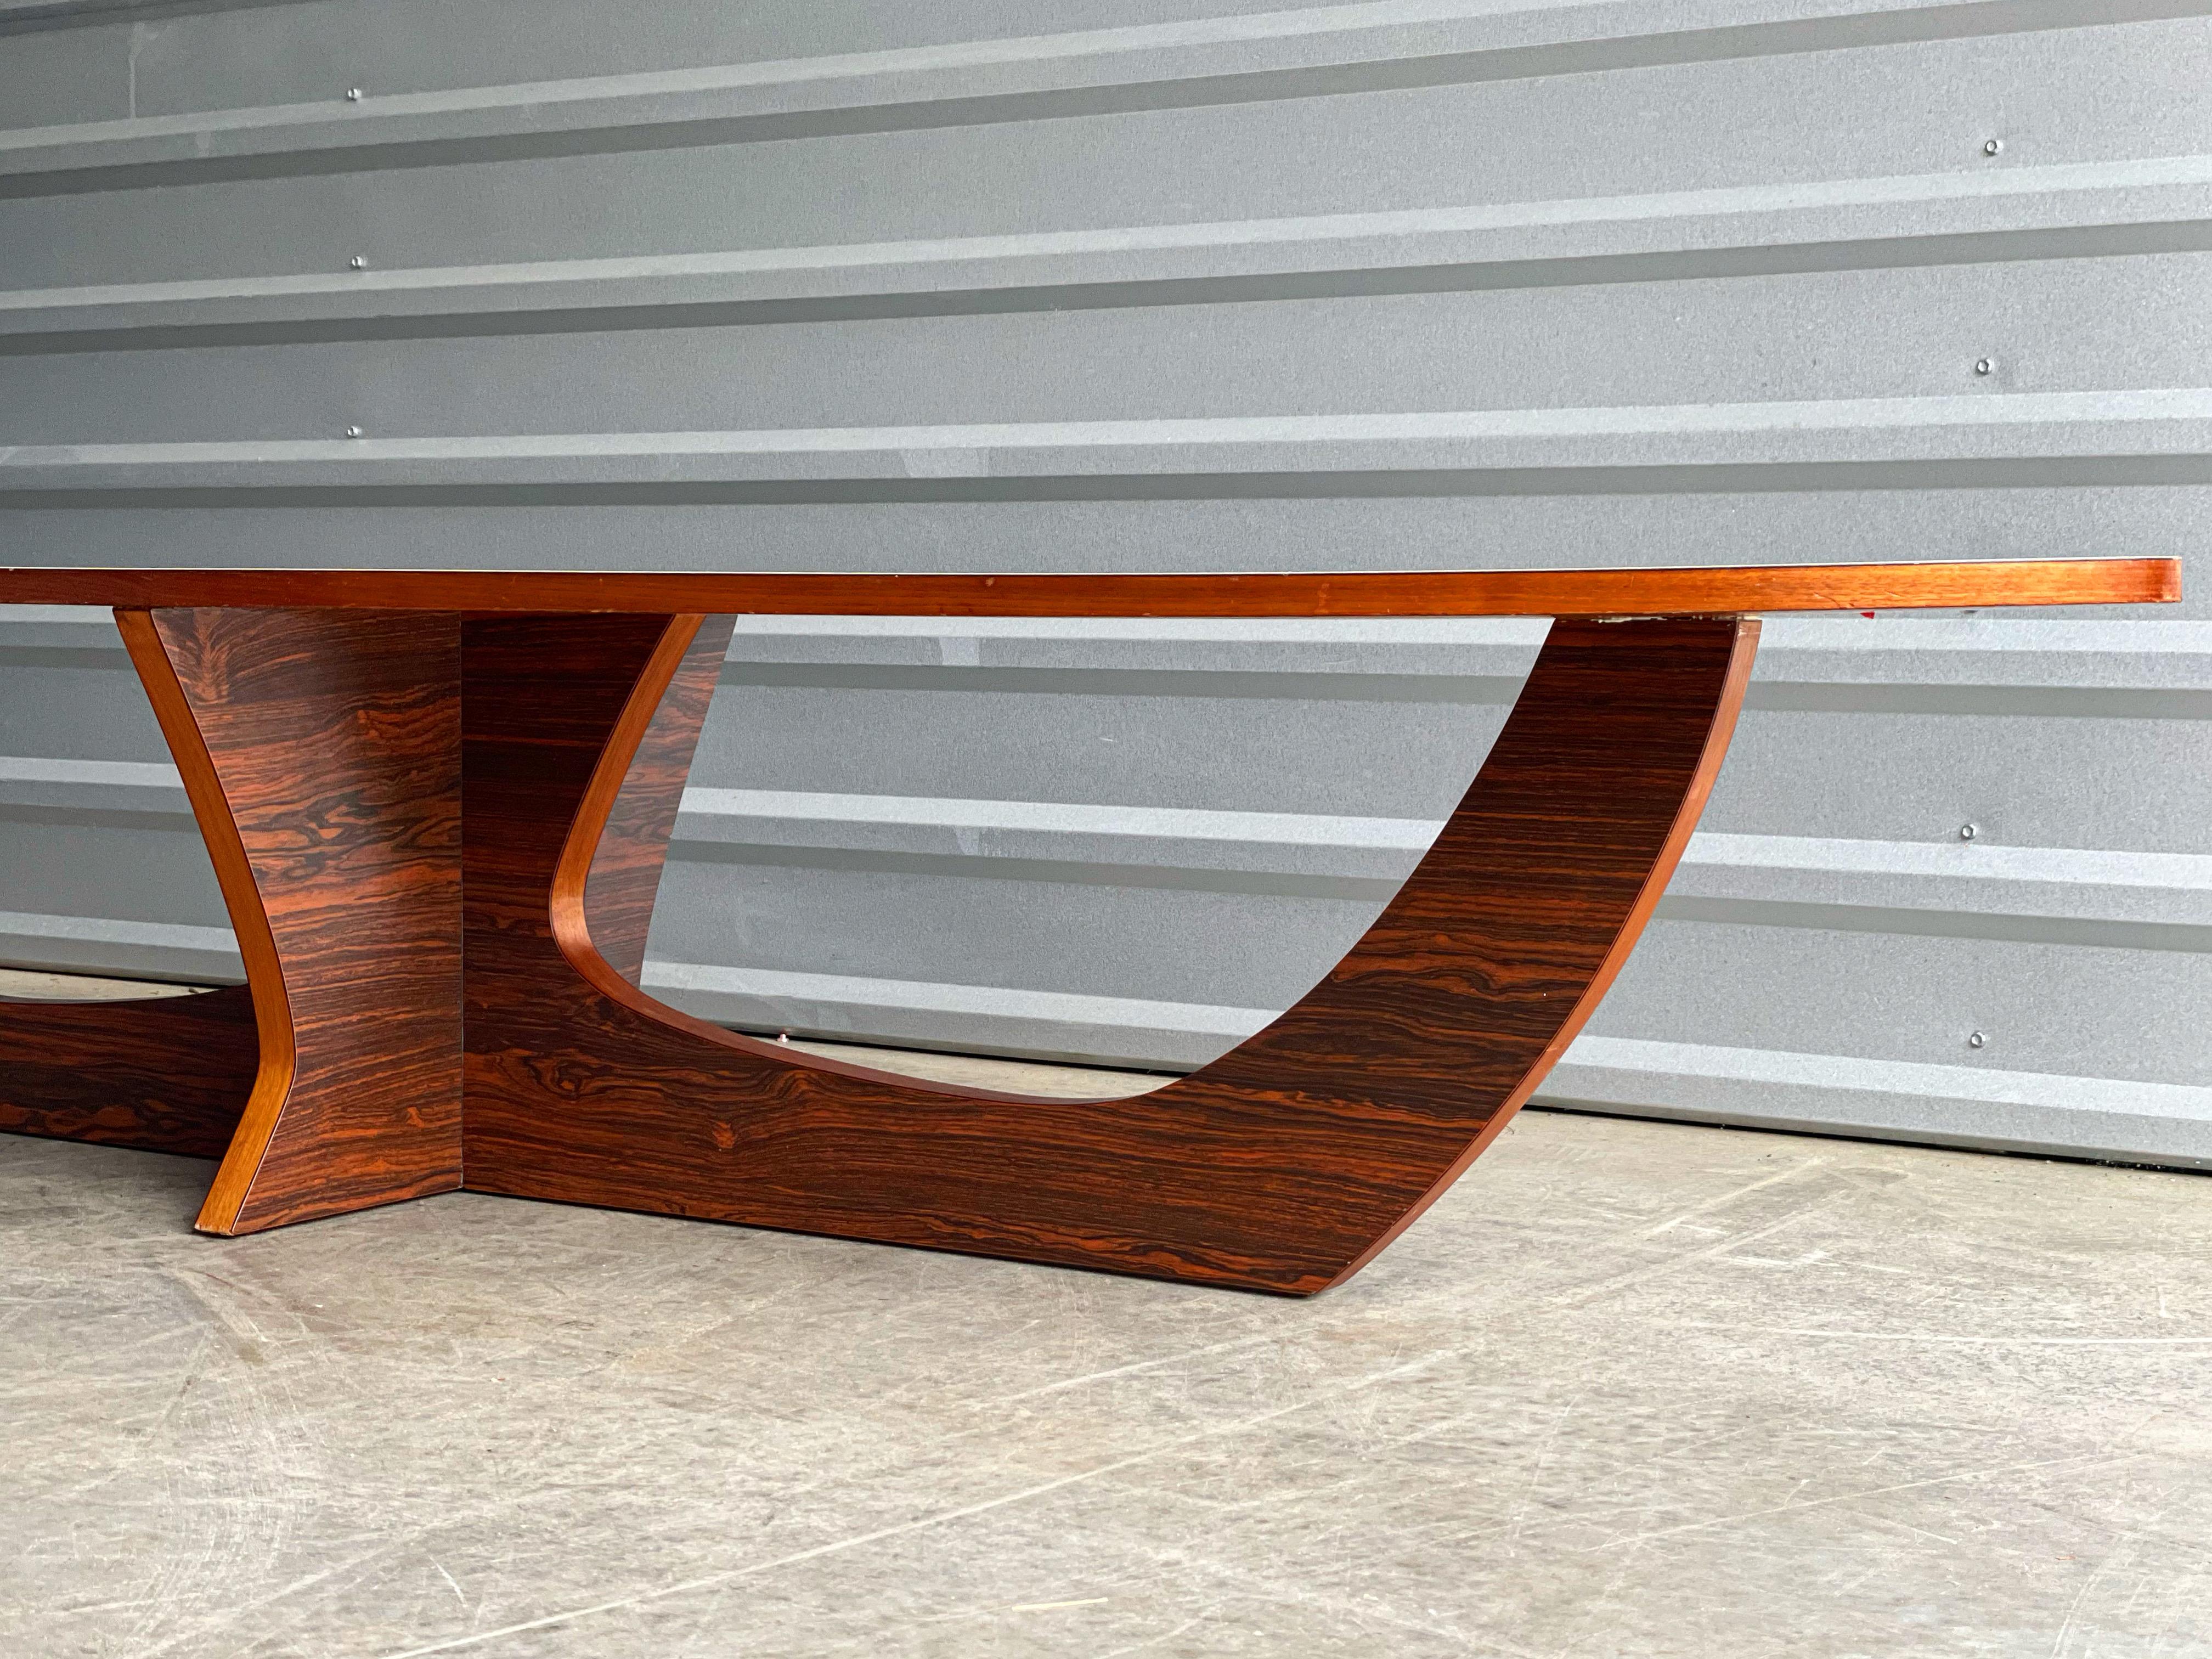 Ceramic Midcentury Samson Berman Studio Craft Surfboard Style Coffee Table W/ Inset Tile